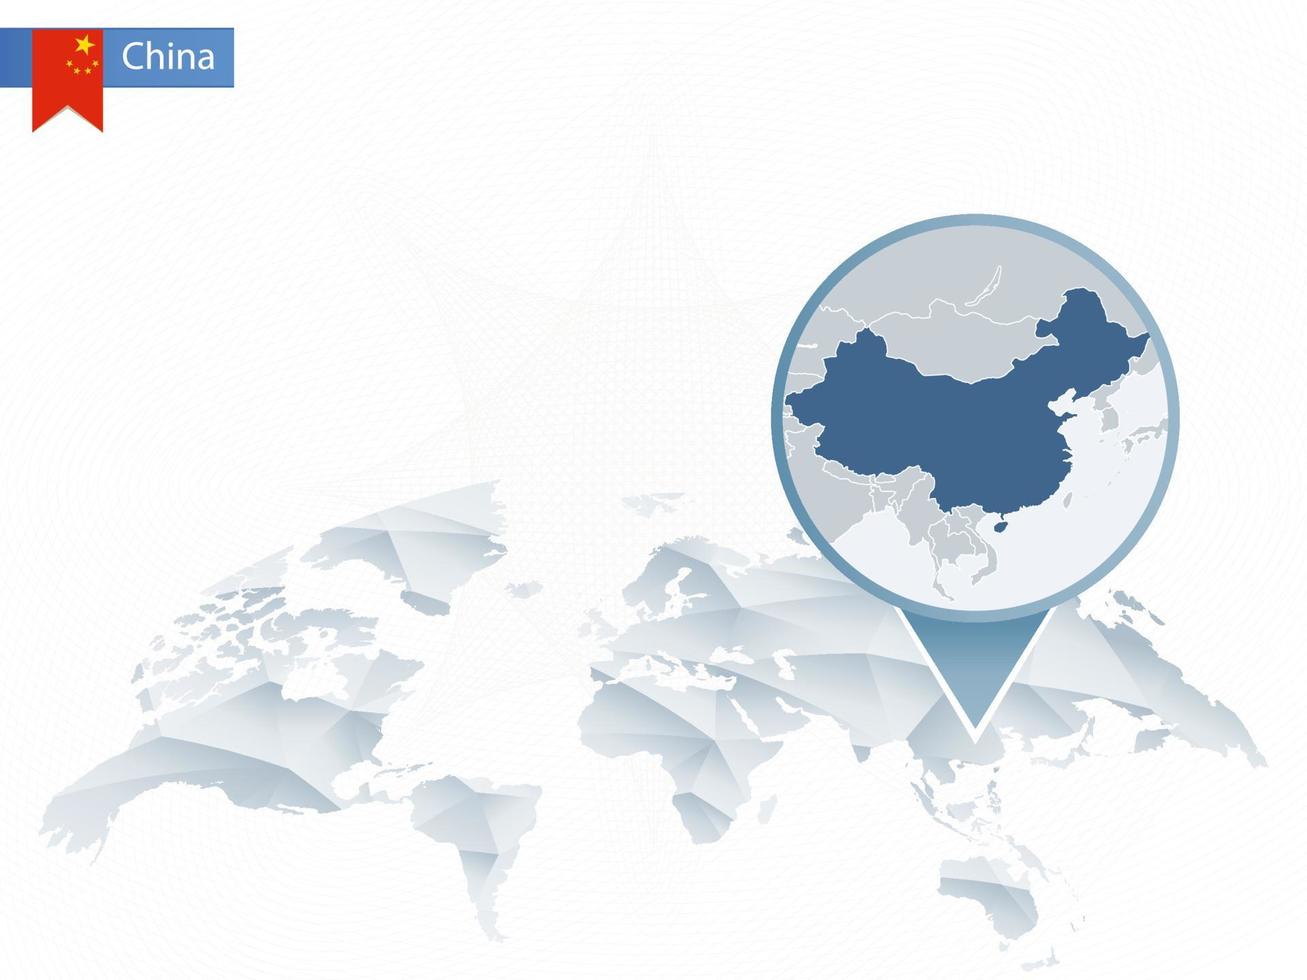 mapa-múndi arredondado abstrato com mapa detalhado fixado da china. vetor